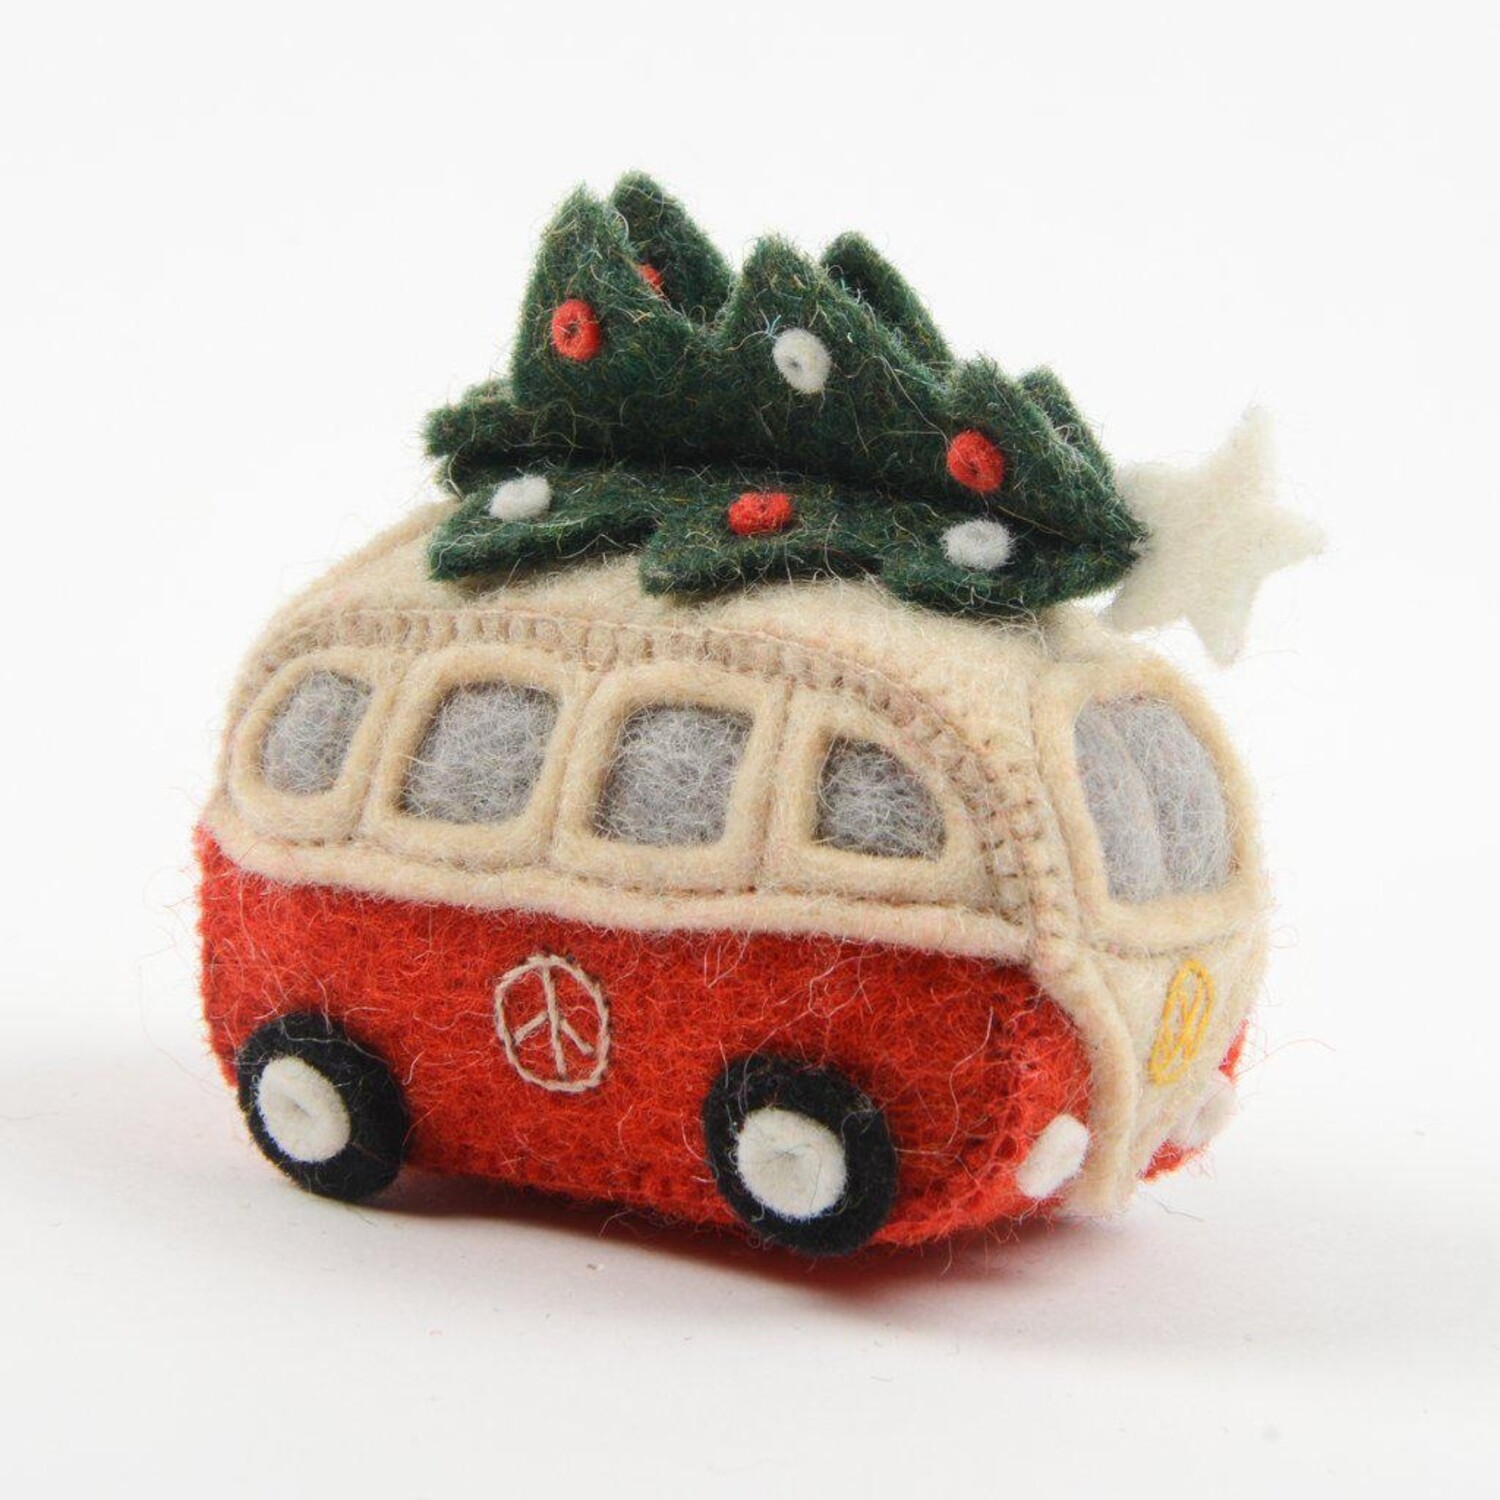 Craftspring Christmas Tree Hippie Bus Ornament - Yellow Turtle